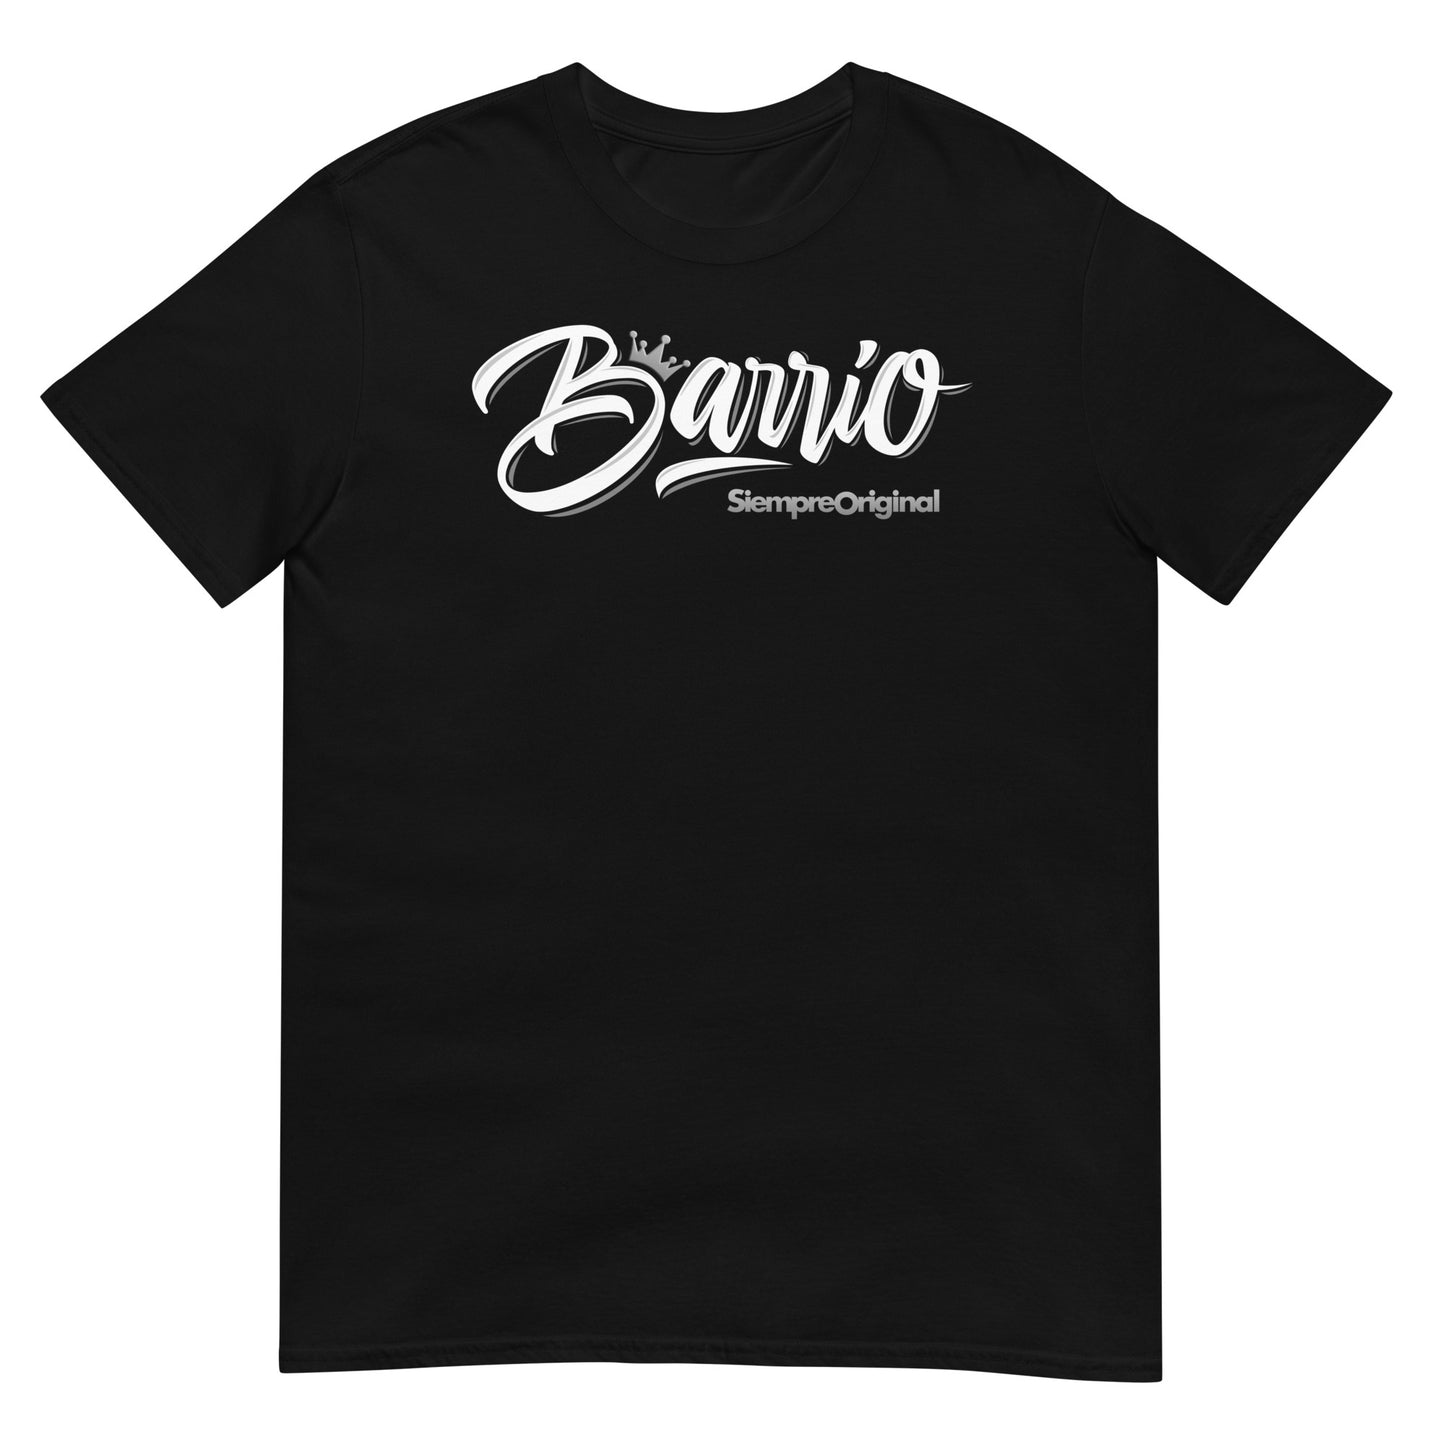 Camiseta Barrio. Color Negro.